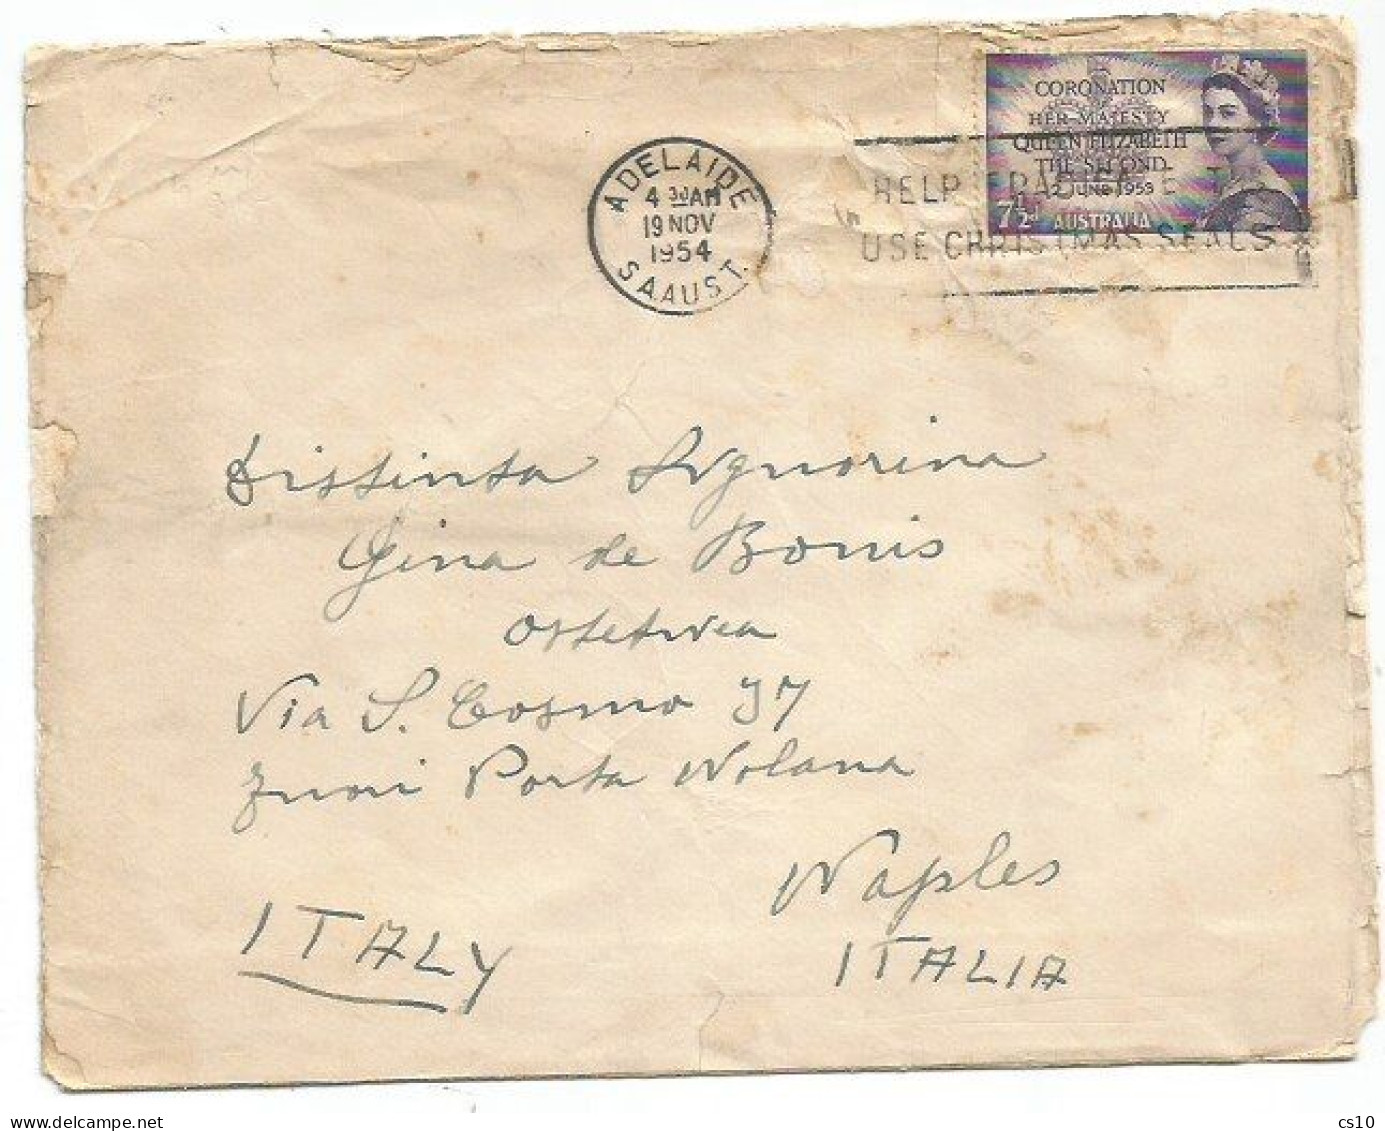 Australia Coronation Day 1953 D.7.1/2 Solo Franking AirmailCV Adelaide 19nov1954 To Italy - Storia Postale